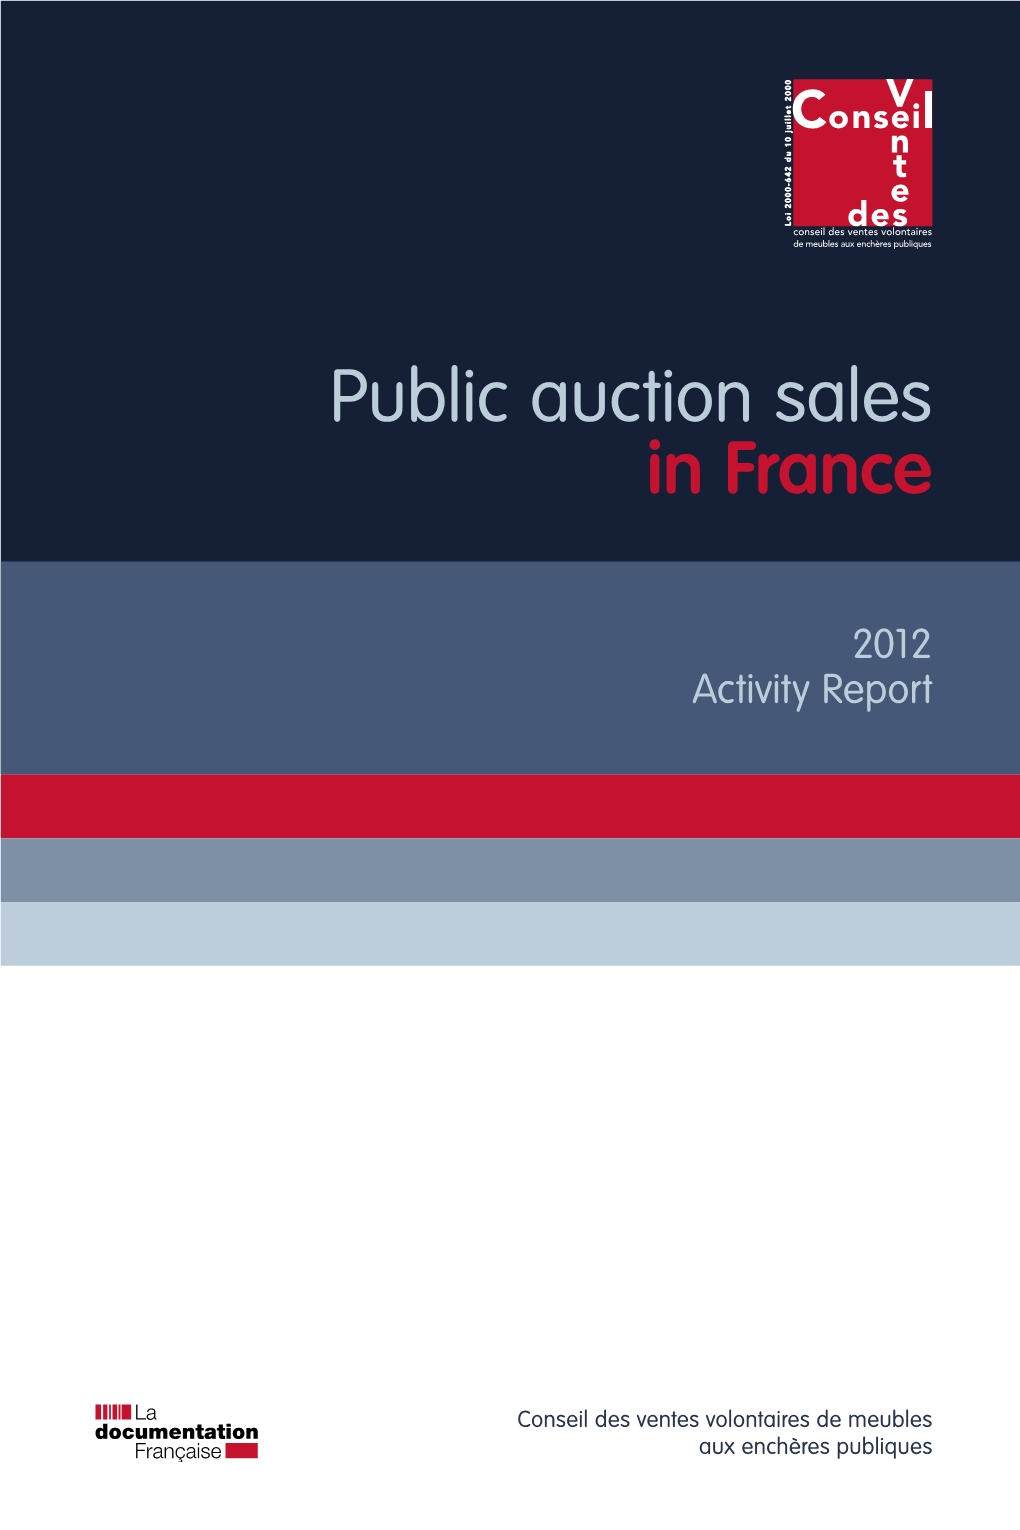 Public Auction Sales in France